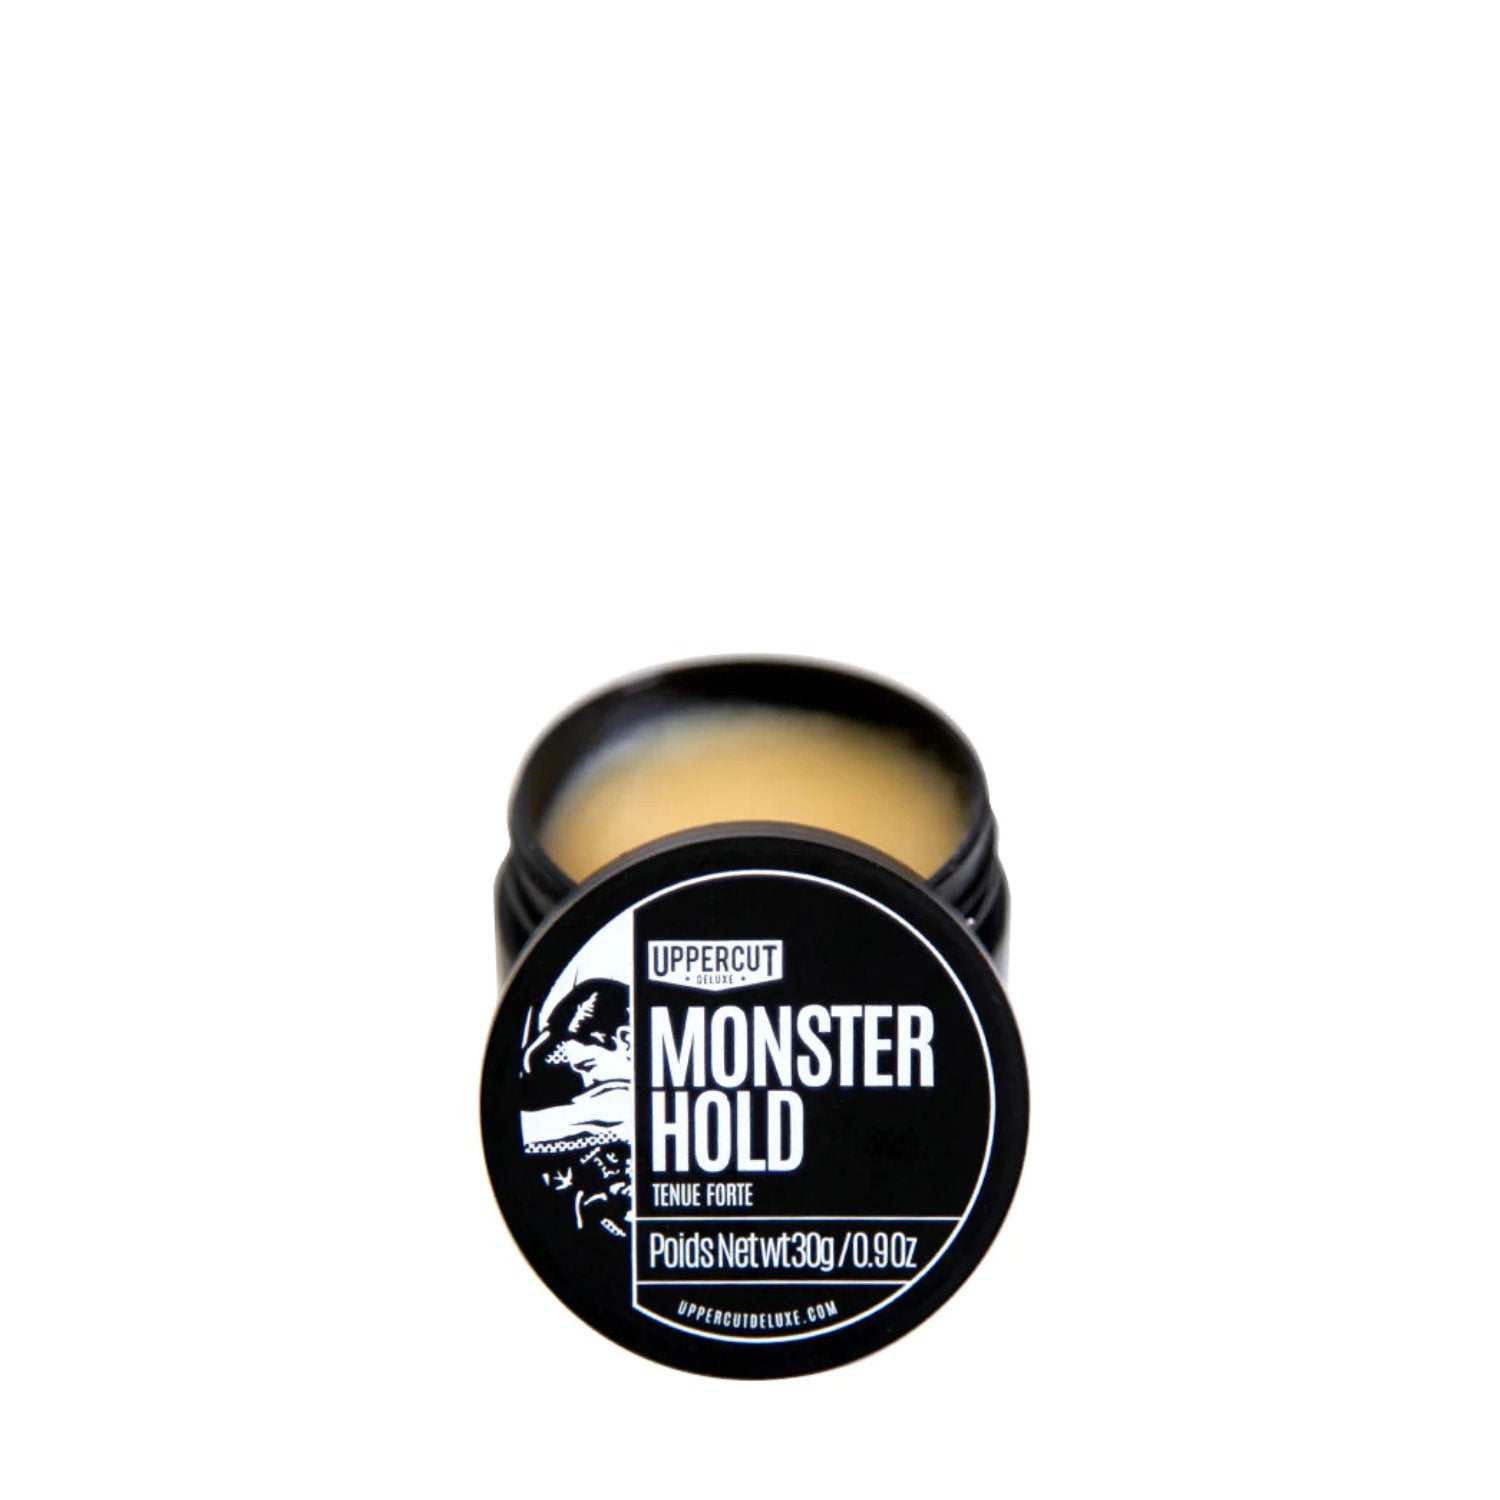 Haarpomade Monster Hold - Uppercut Deluxe